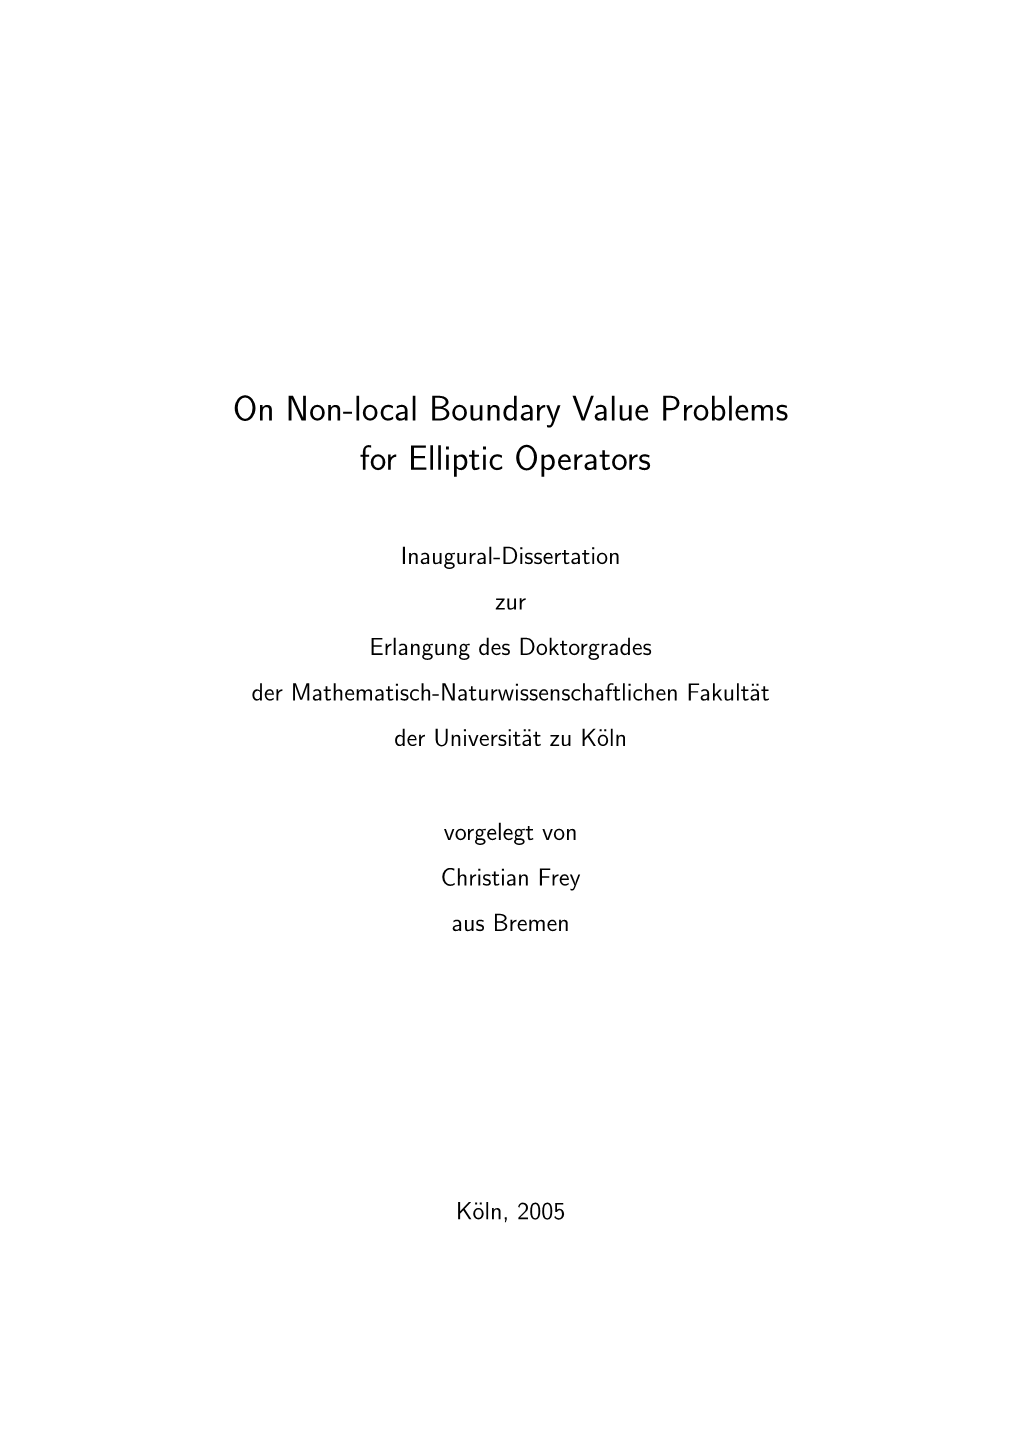 On Non-Local Boundary Value Problems for Elliptic Operators